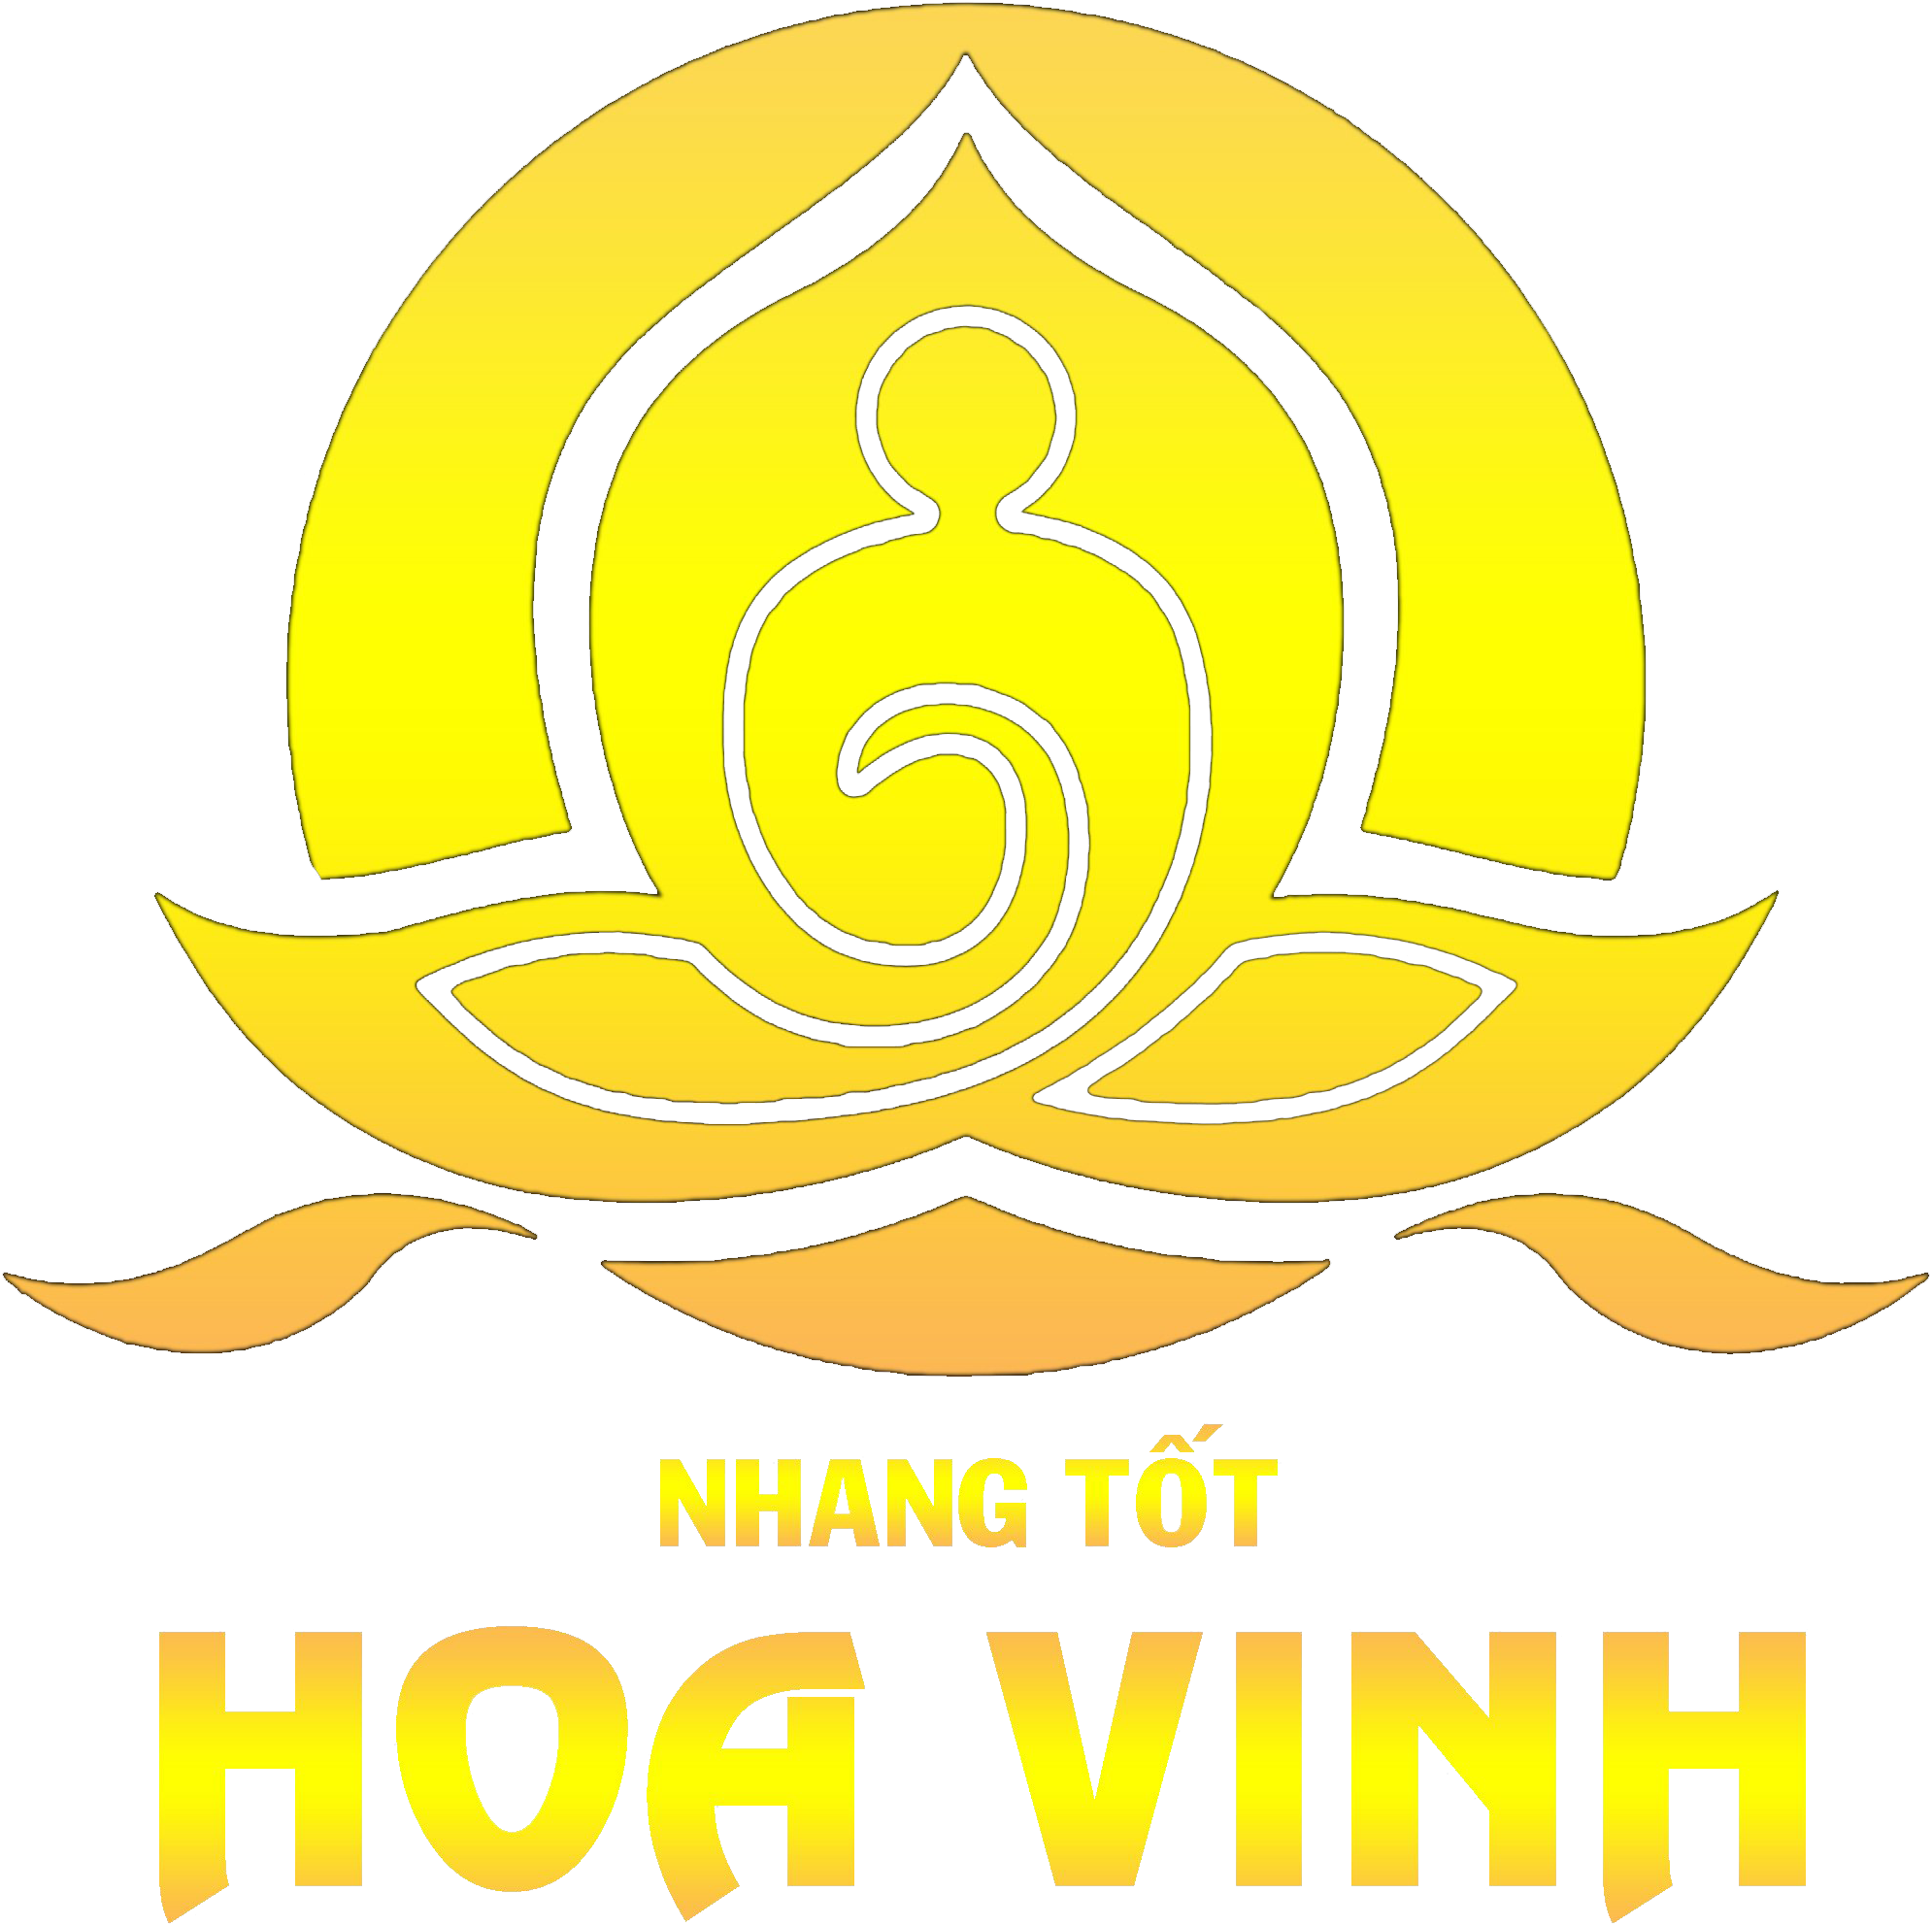 NHANG HOA VINH